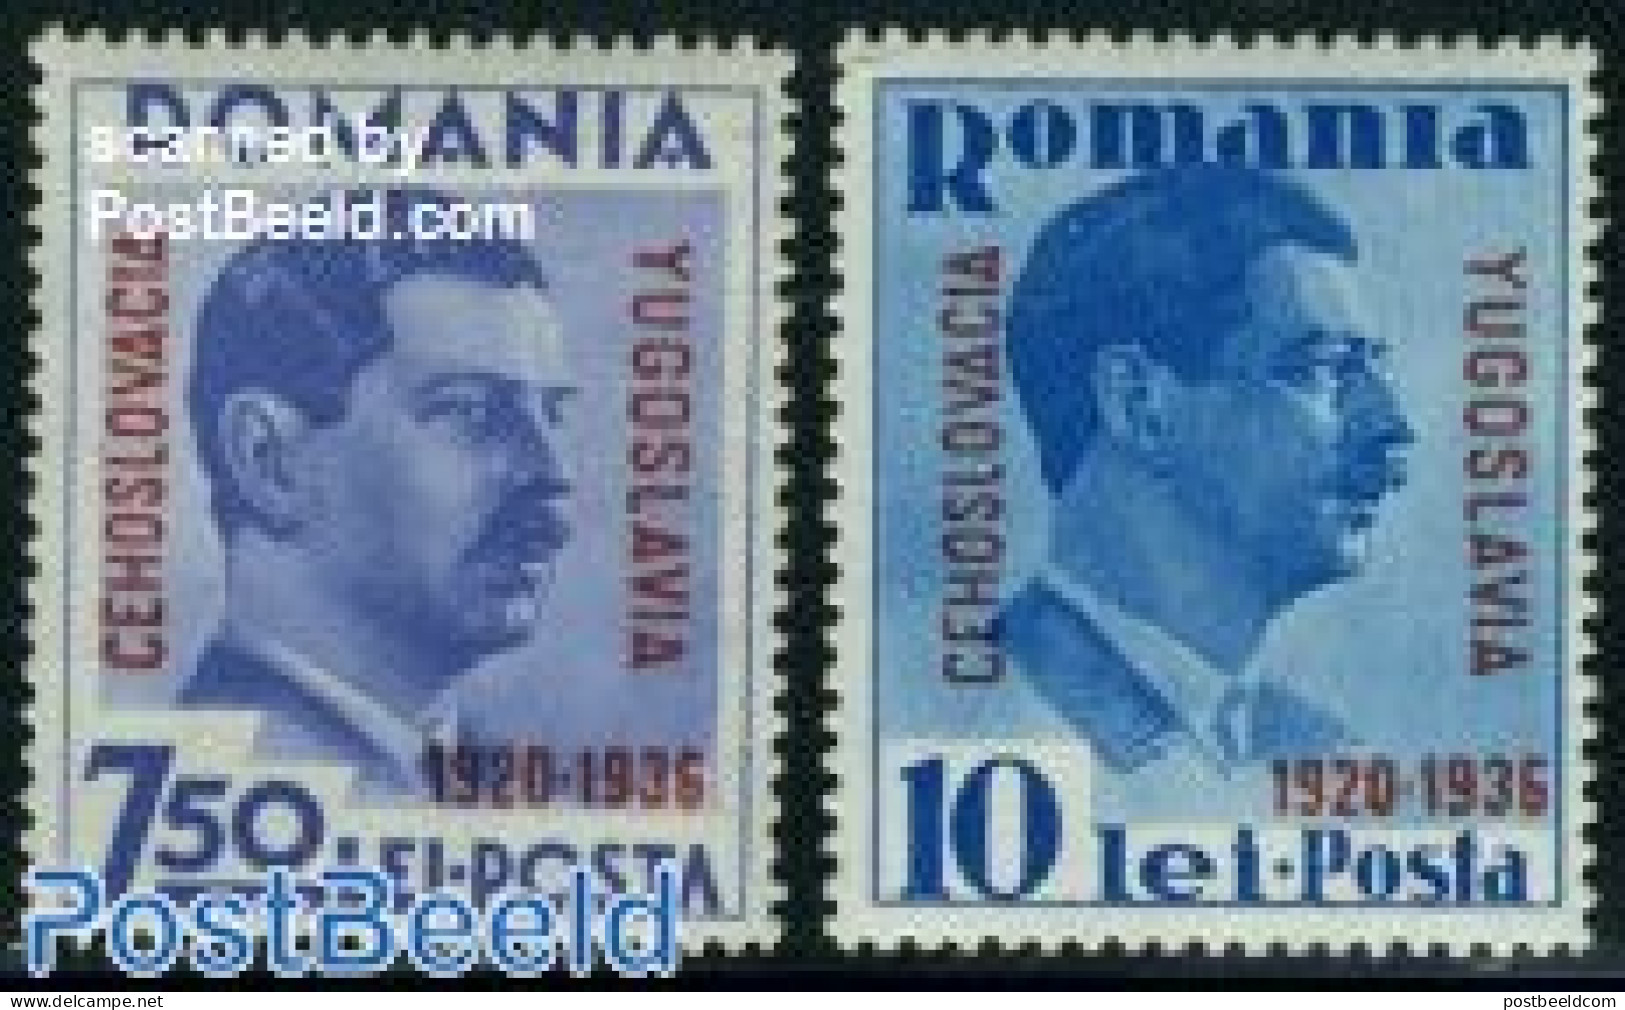 Romania 1936 Small Entente 2v, Unused (hinged), History - Europa Hang-on Issues - Ongebruikt